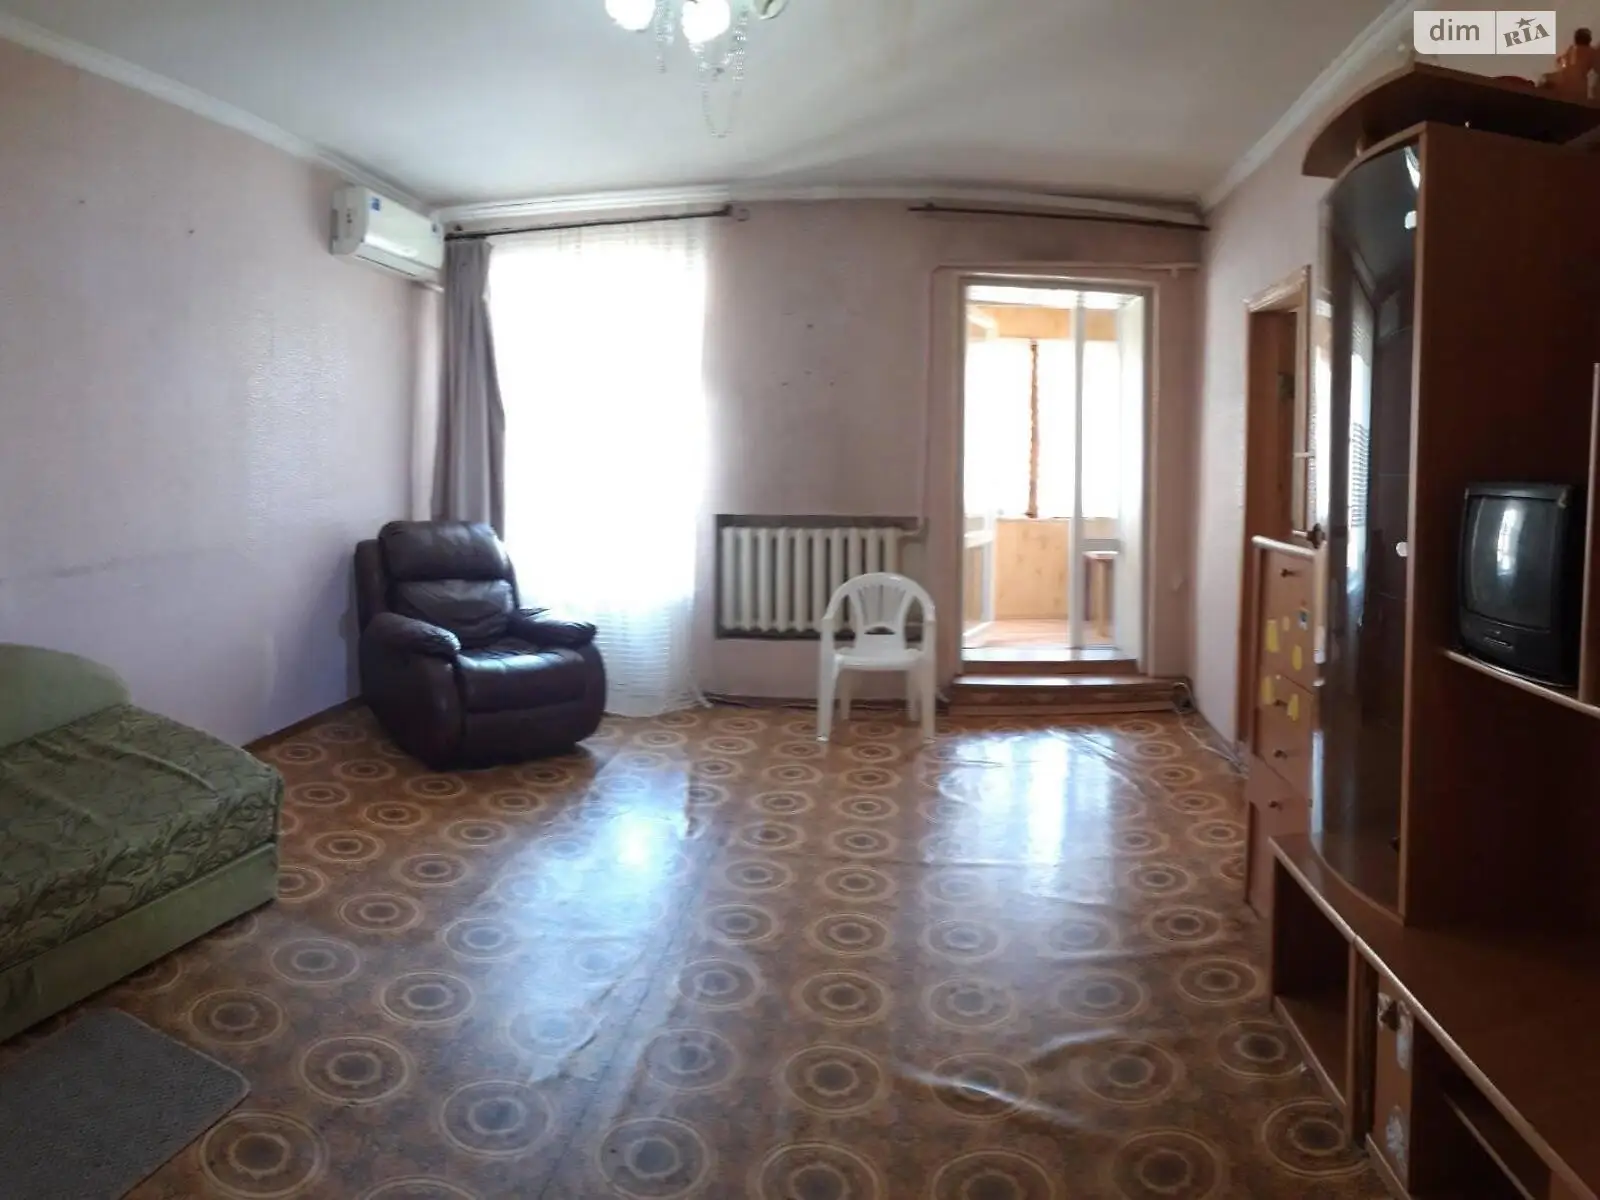 Продается комната 55 кв. м в Одессе, цена: 30000 $ - фото 1